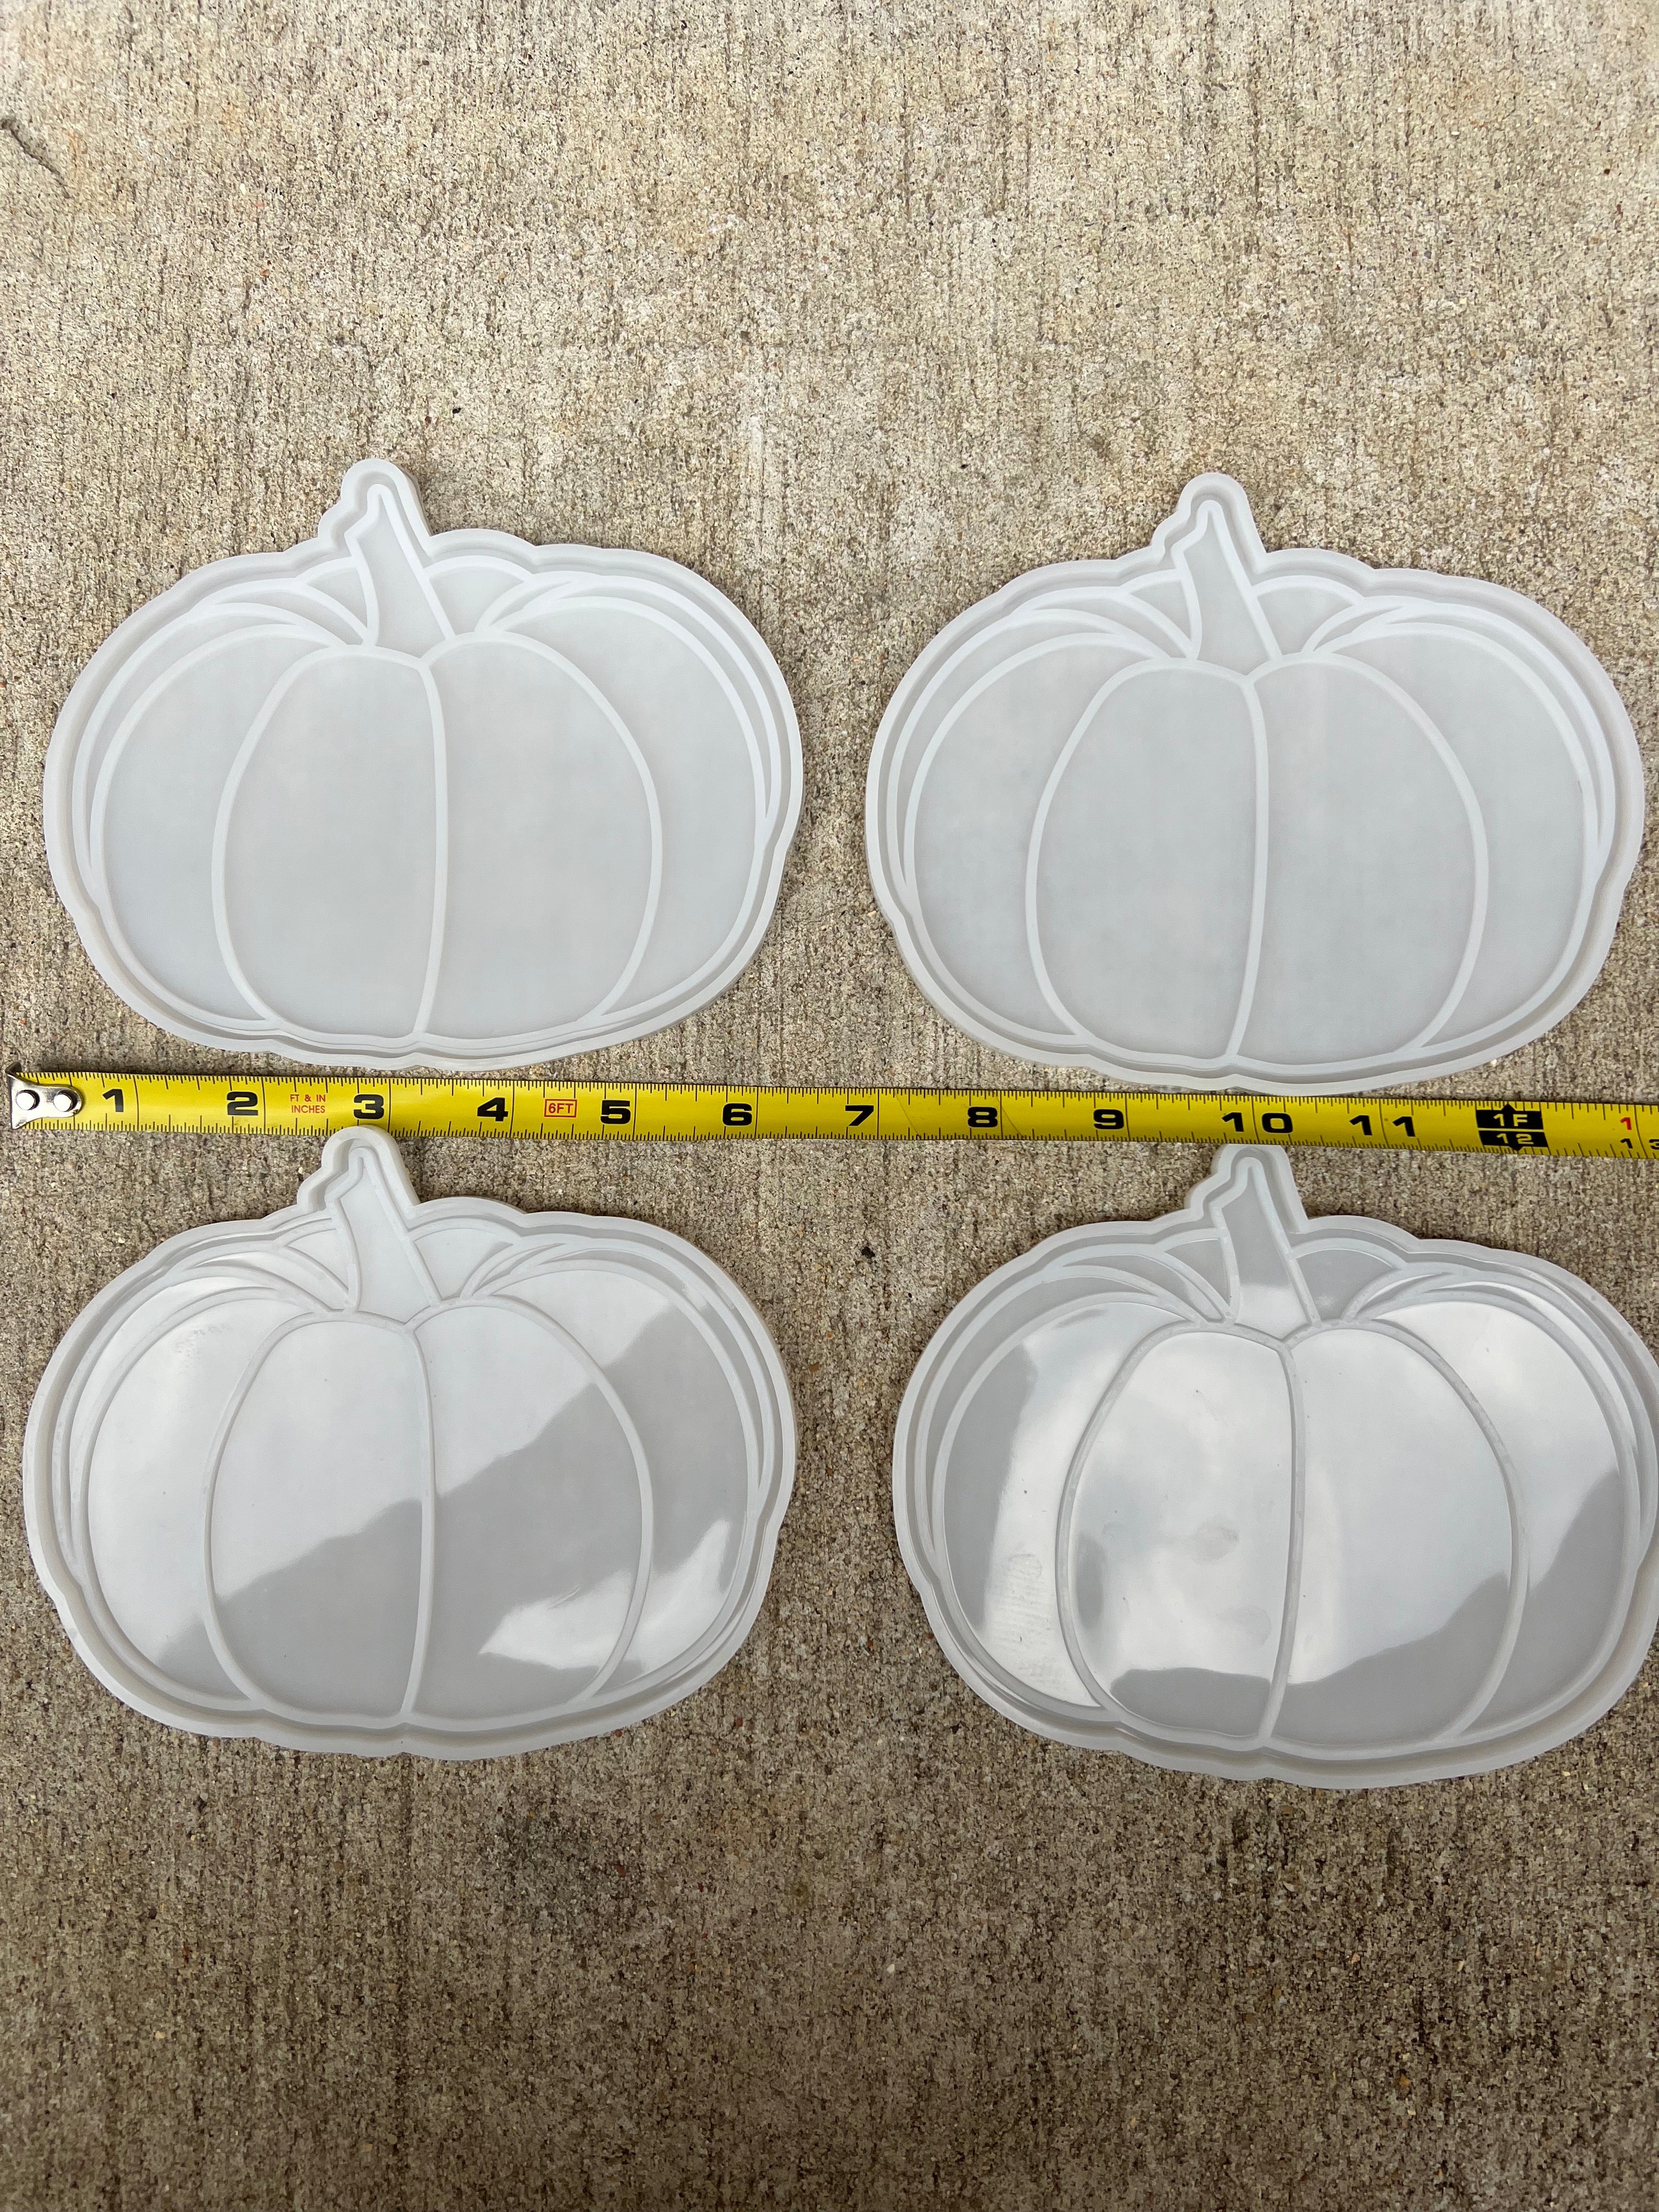 pumpkin resin coaster mold set